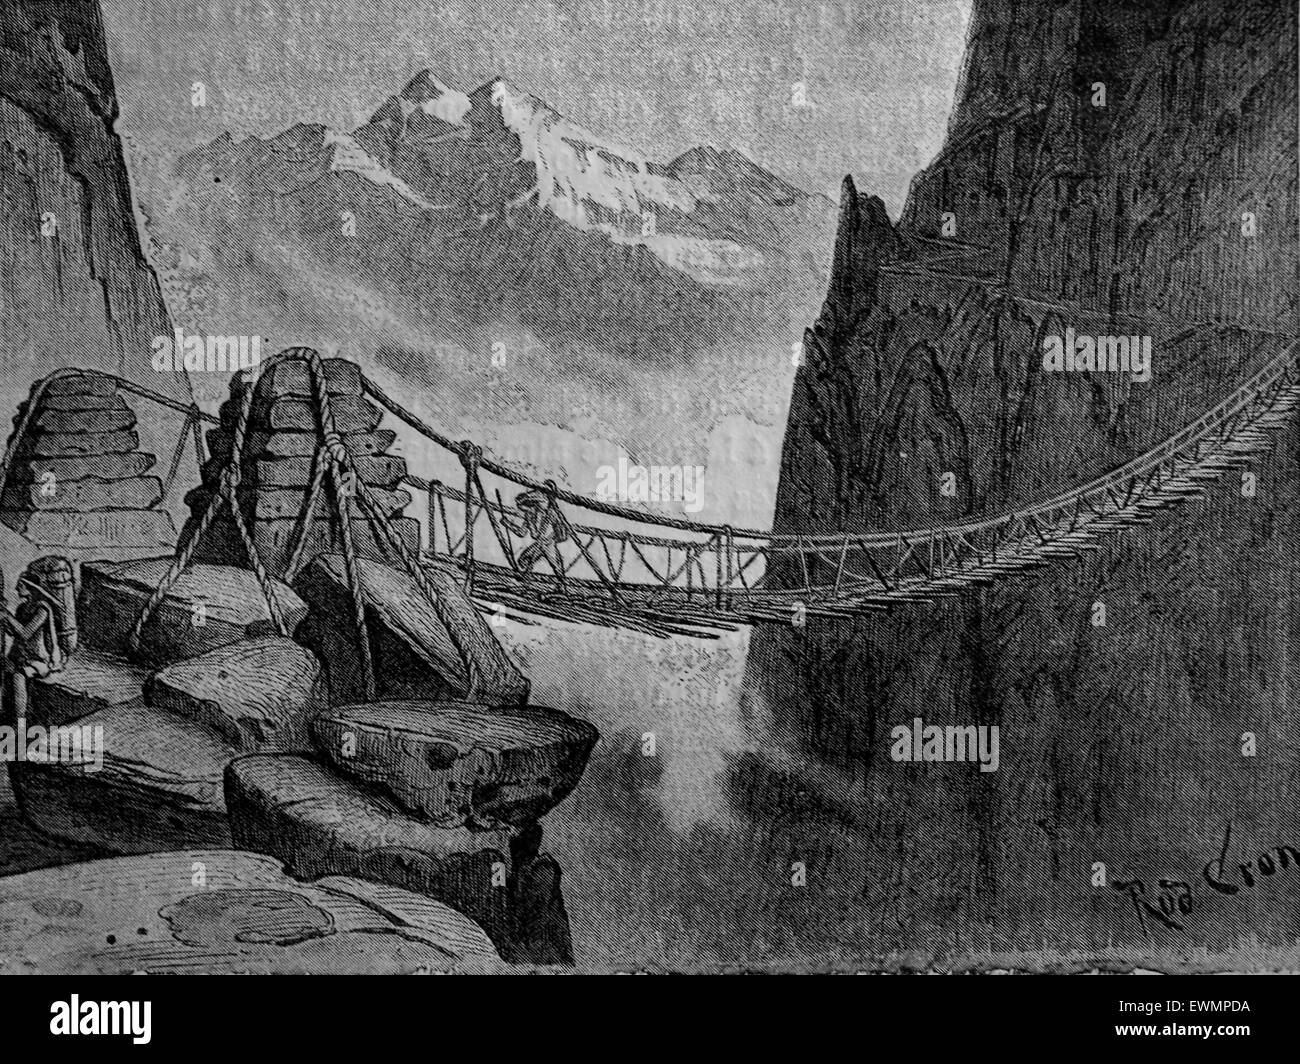 Incan Rope Bridge. Incan Empire. Andes Mountains. Engraving by Rodolfo Cronau. 19th c. Stock Photo